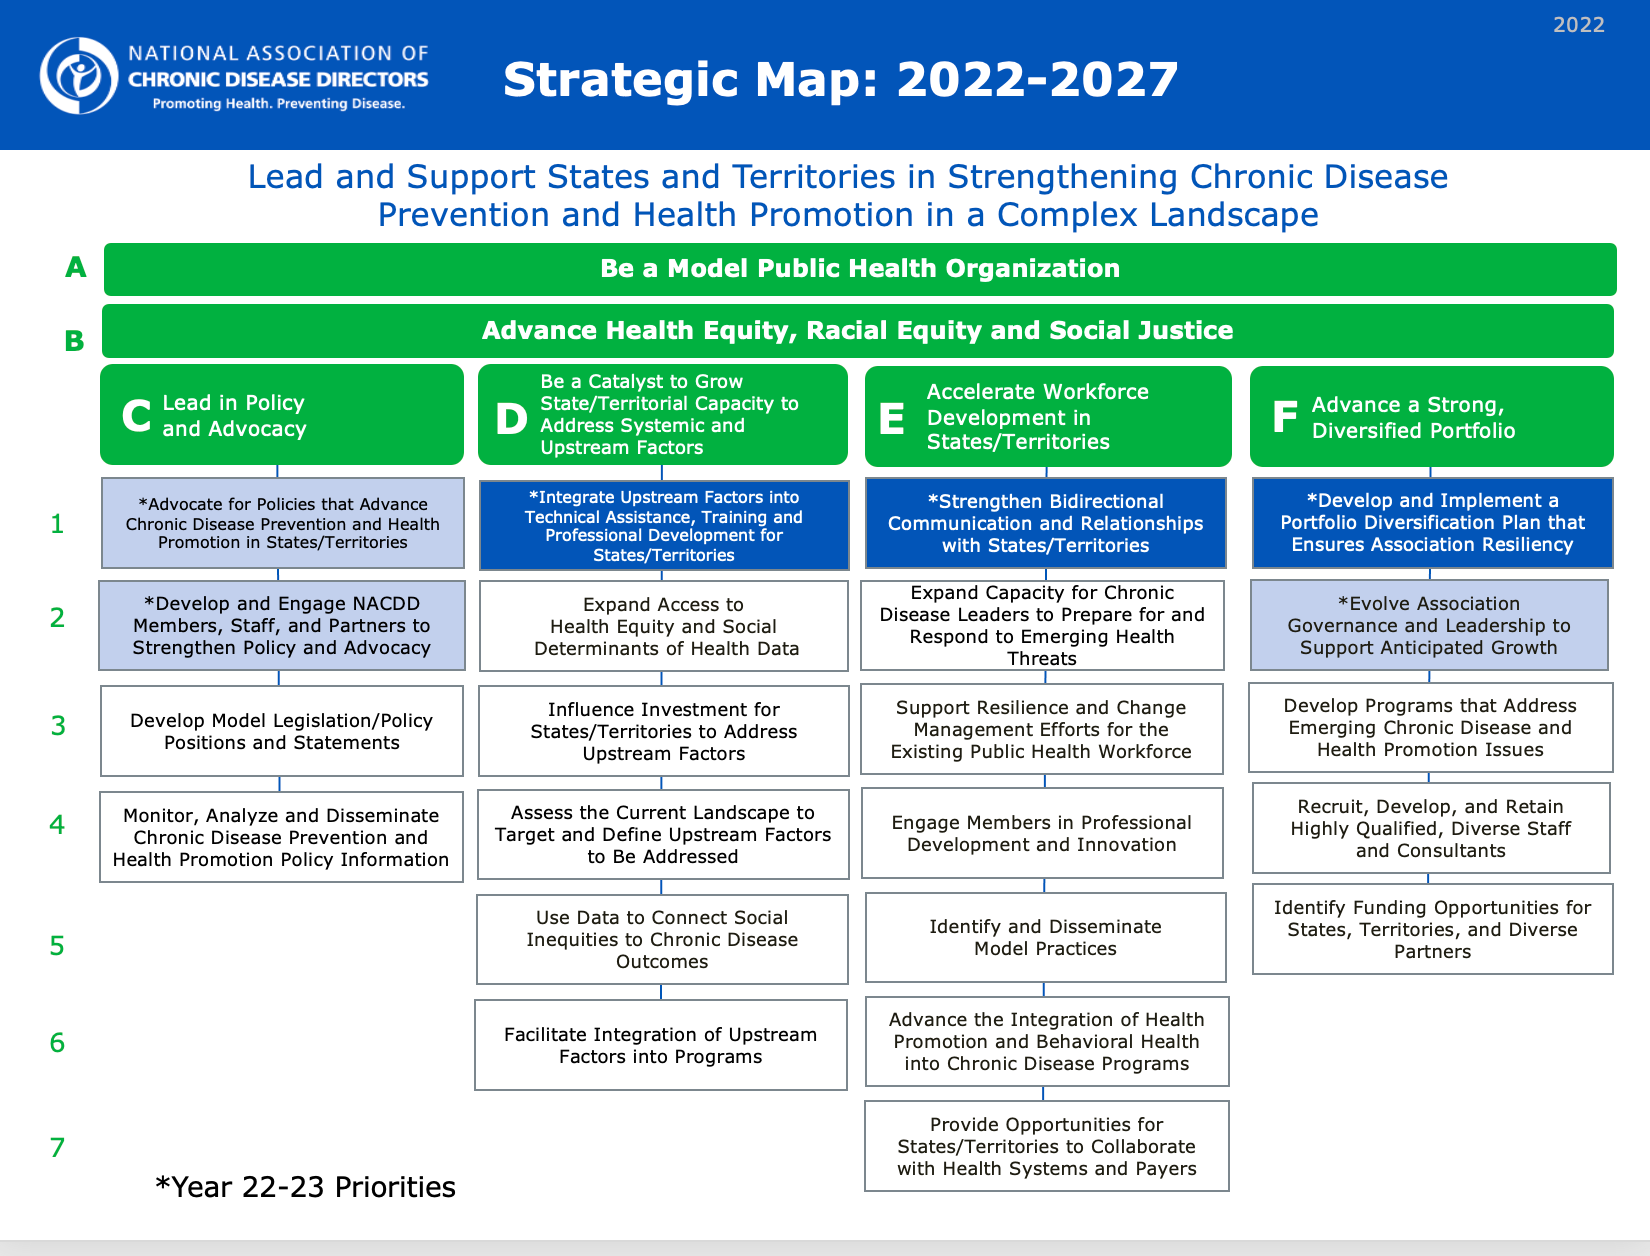 NACDD's 2022-2027 Strategic Map 